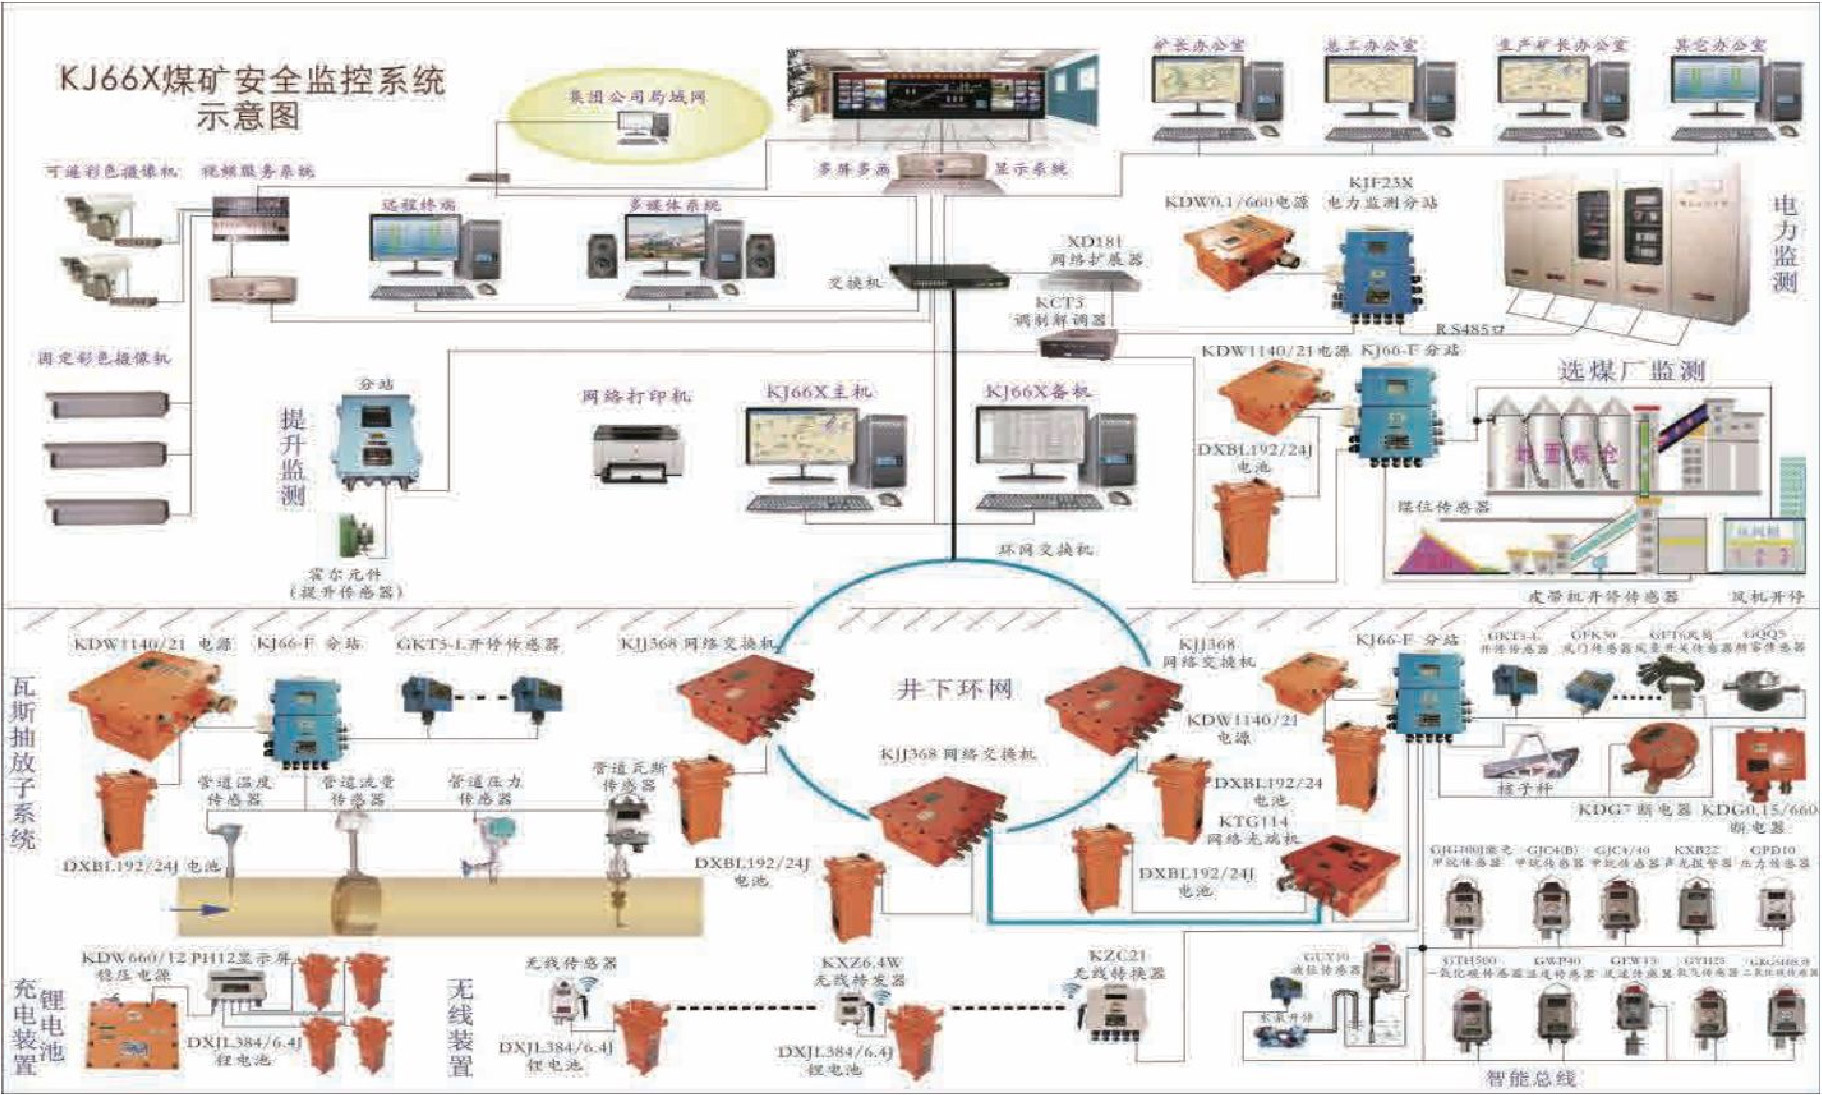 KJ66X煤矿安全监控系统(图1)